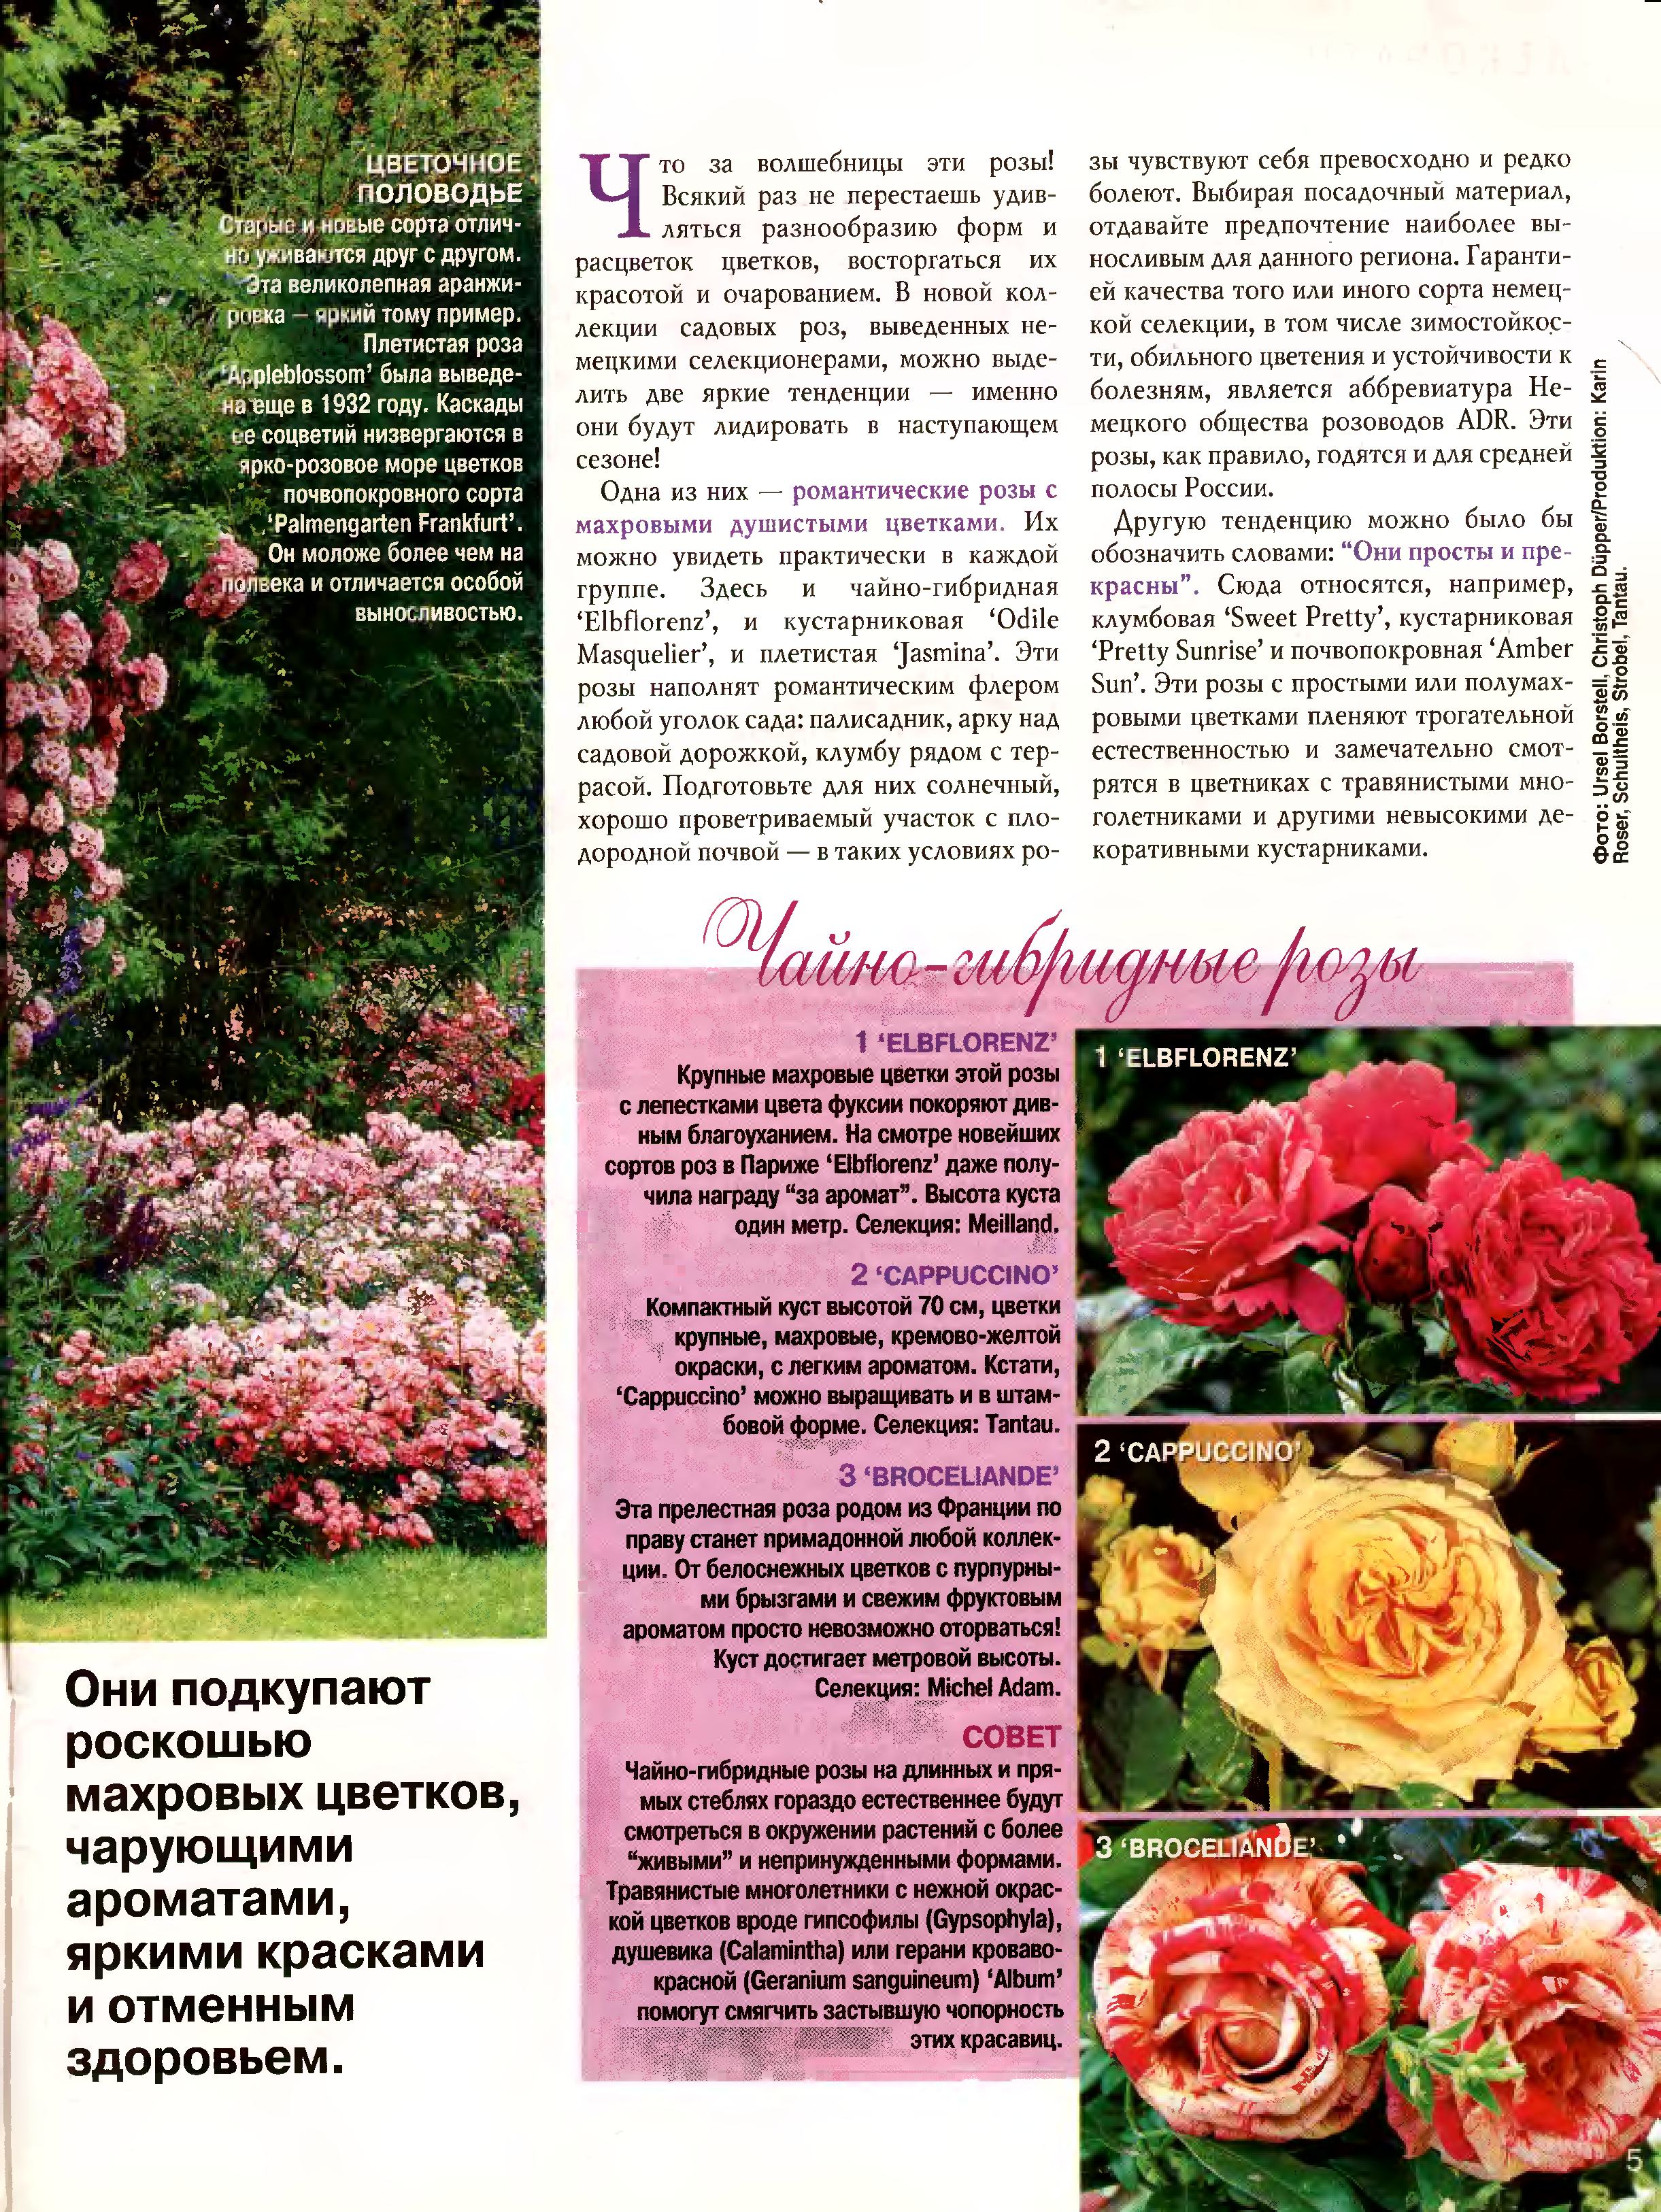 Роза Лавиния (Lawinia) — описание популярного цветка